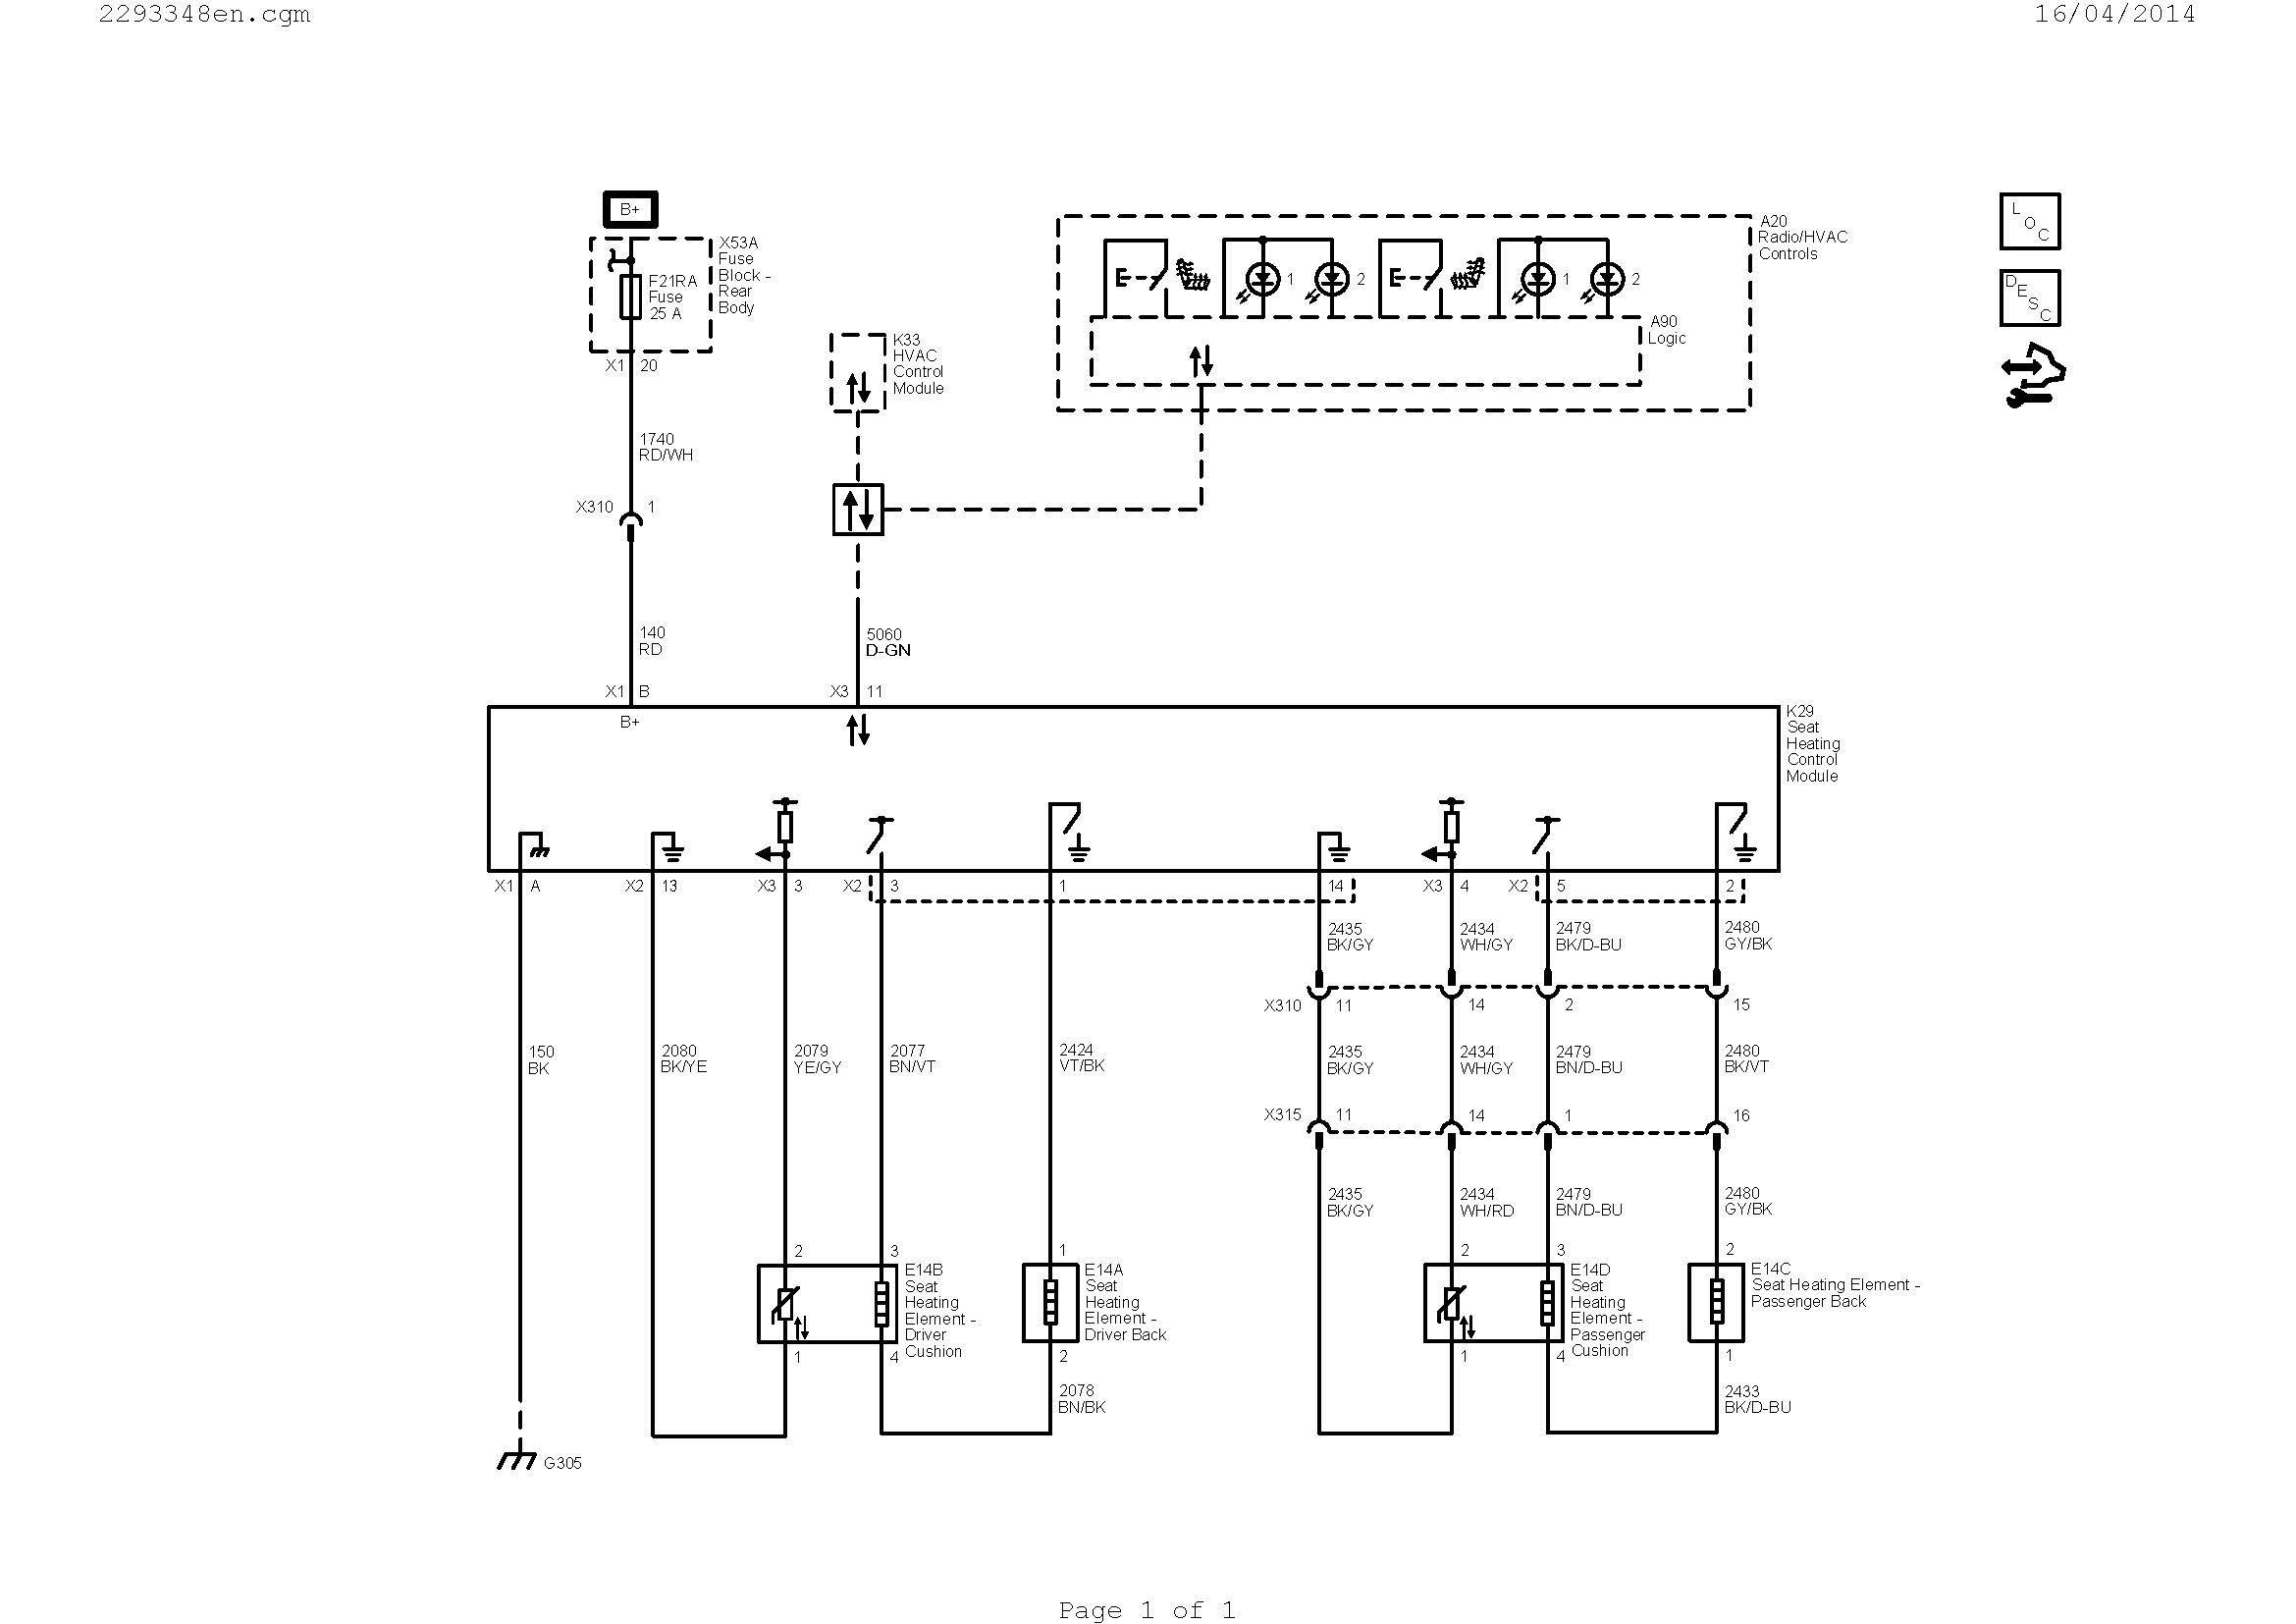 Wiring Diagram for Distributor Fresh Wiring Diagram for A Relay Switch Save Wiring Diagram Ac Valid